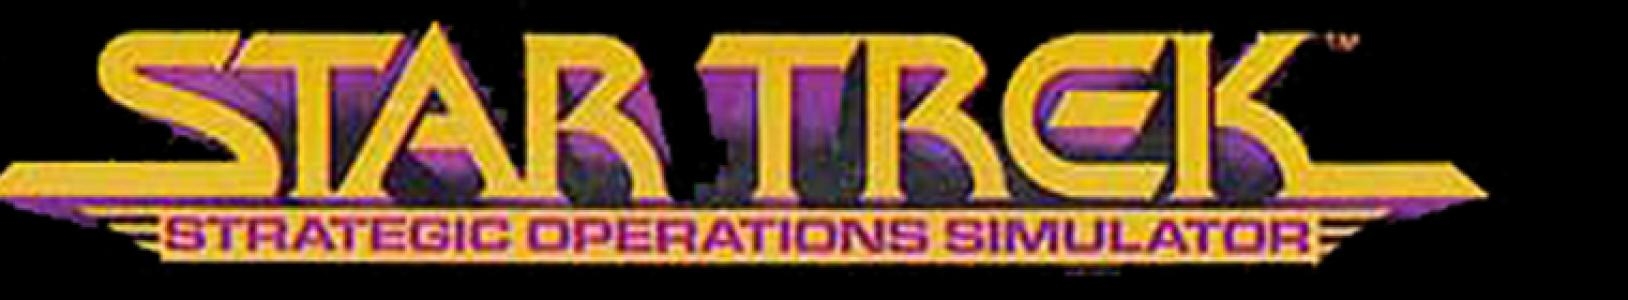 Star Trek: Strategic Operations Simulator banner